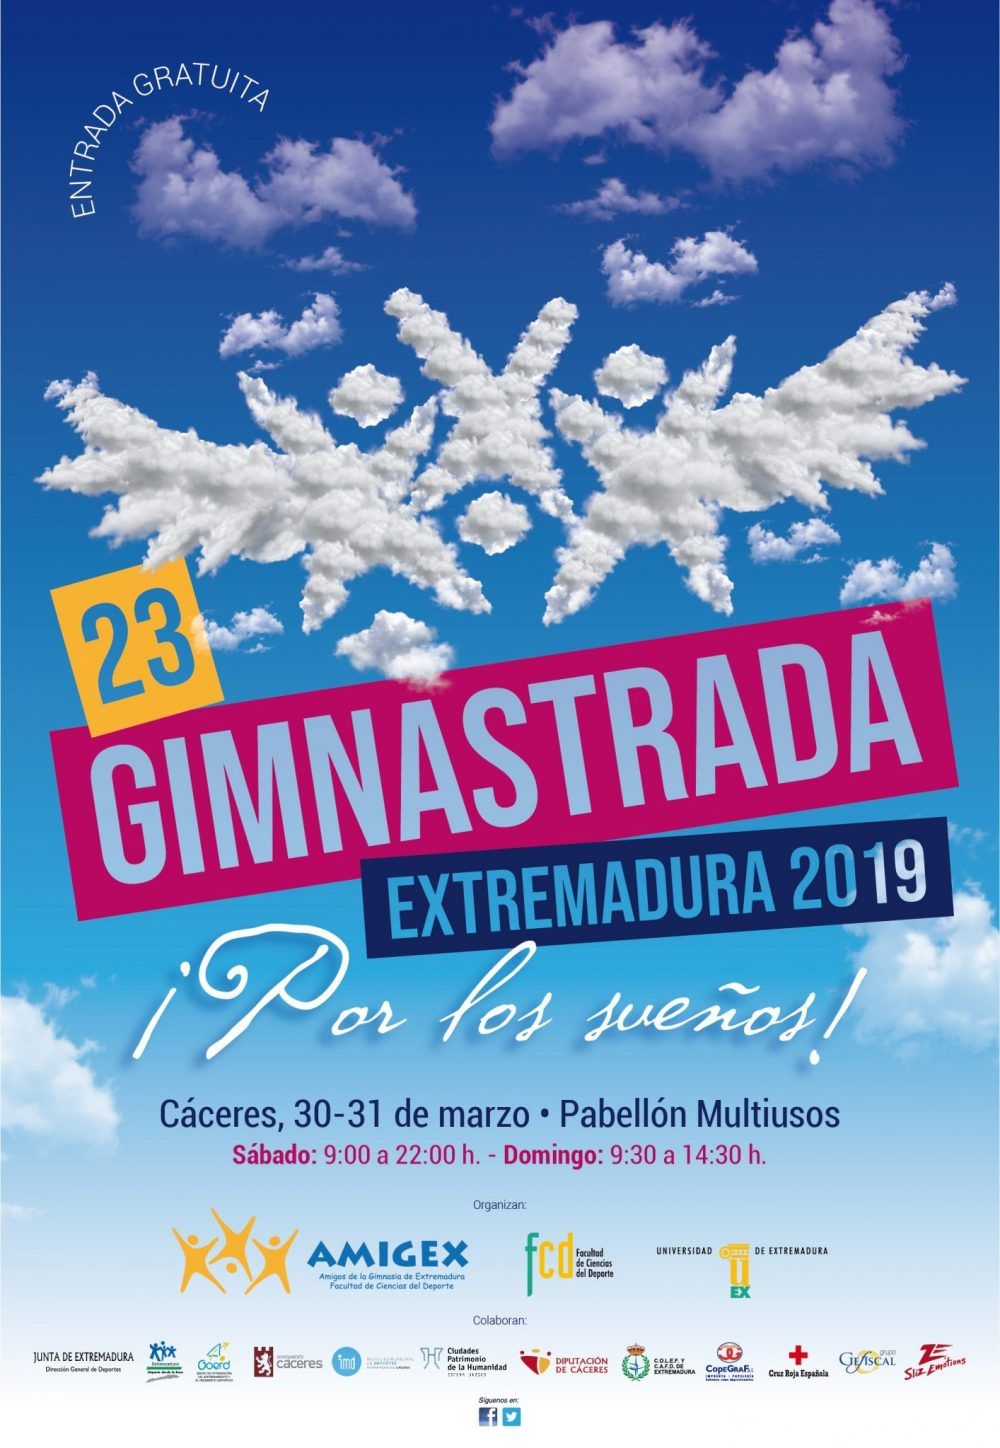 XXIII Gimnastrada Extremadura - Cáceres